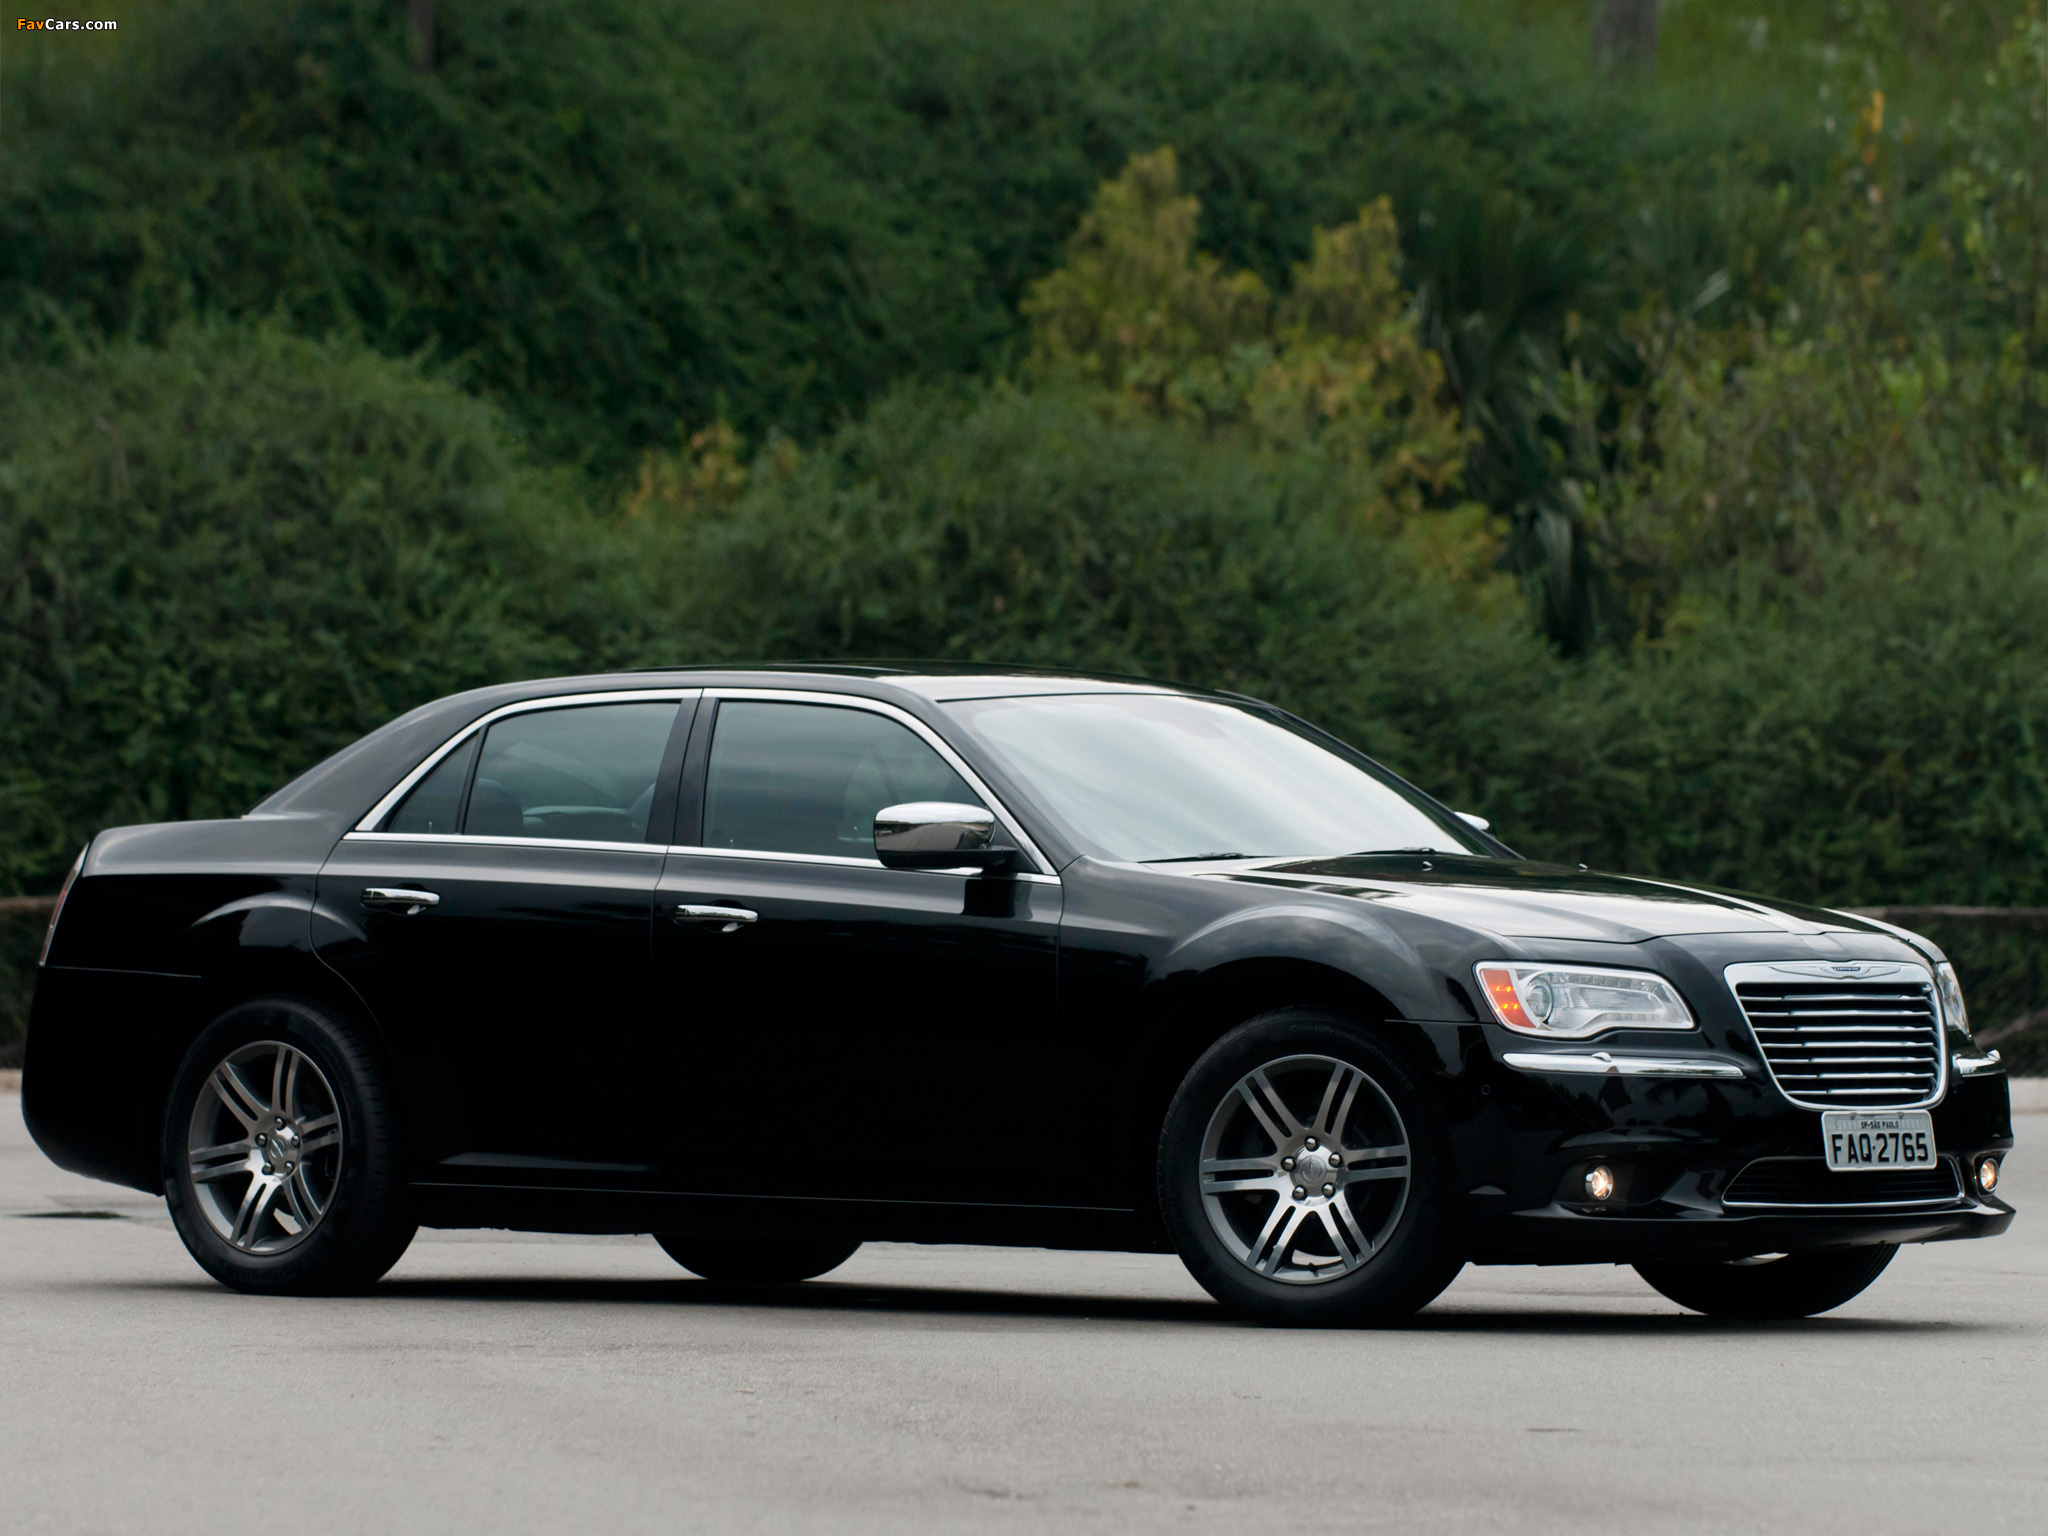 Chrysler 300C 2012 images (2048x1536)